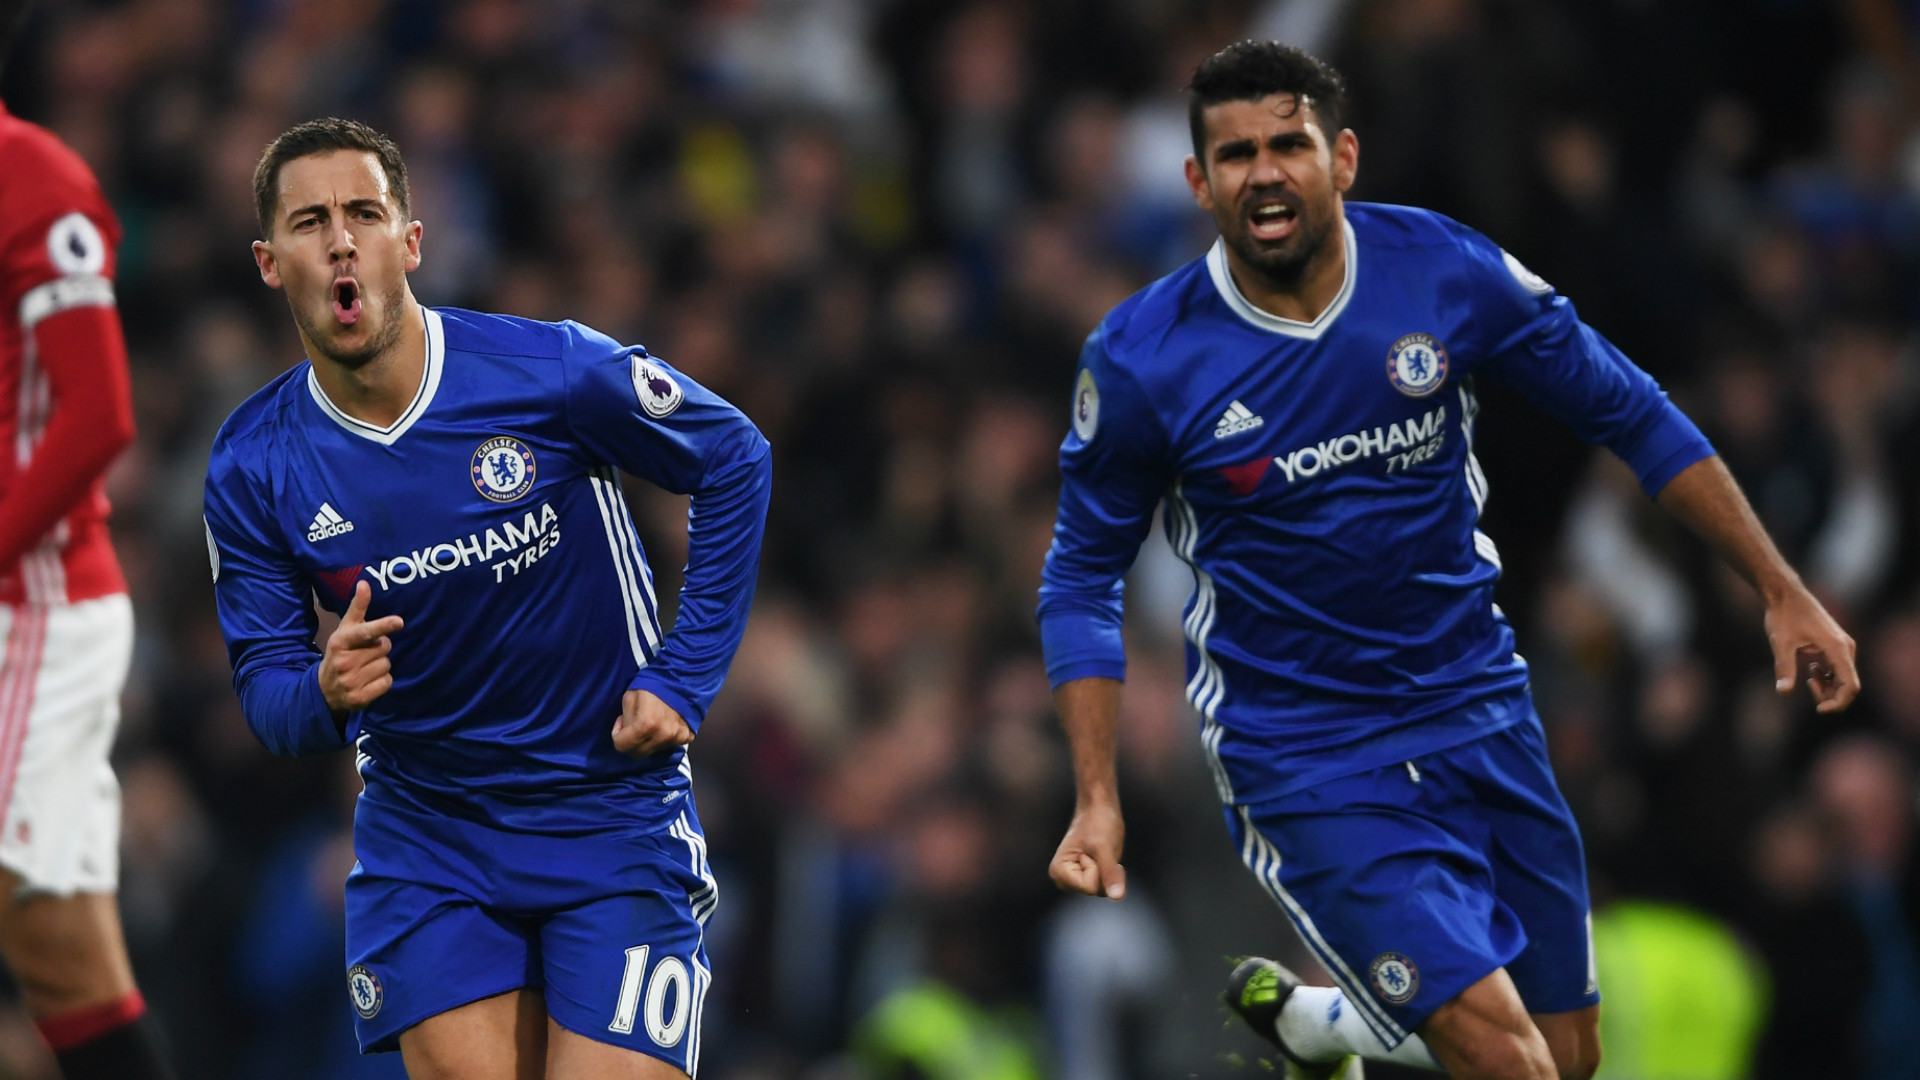 Eden Hazard and Diego Costa are set to leave Chelsea Eden-hazard-diego-costa-chelsea_158vblt1g1th1i9ksznq9d1q0